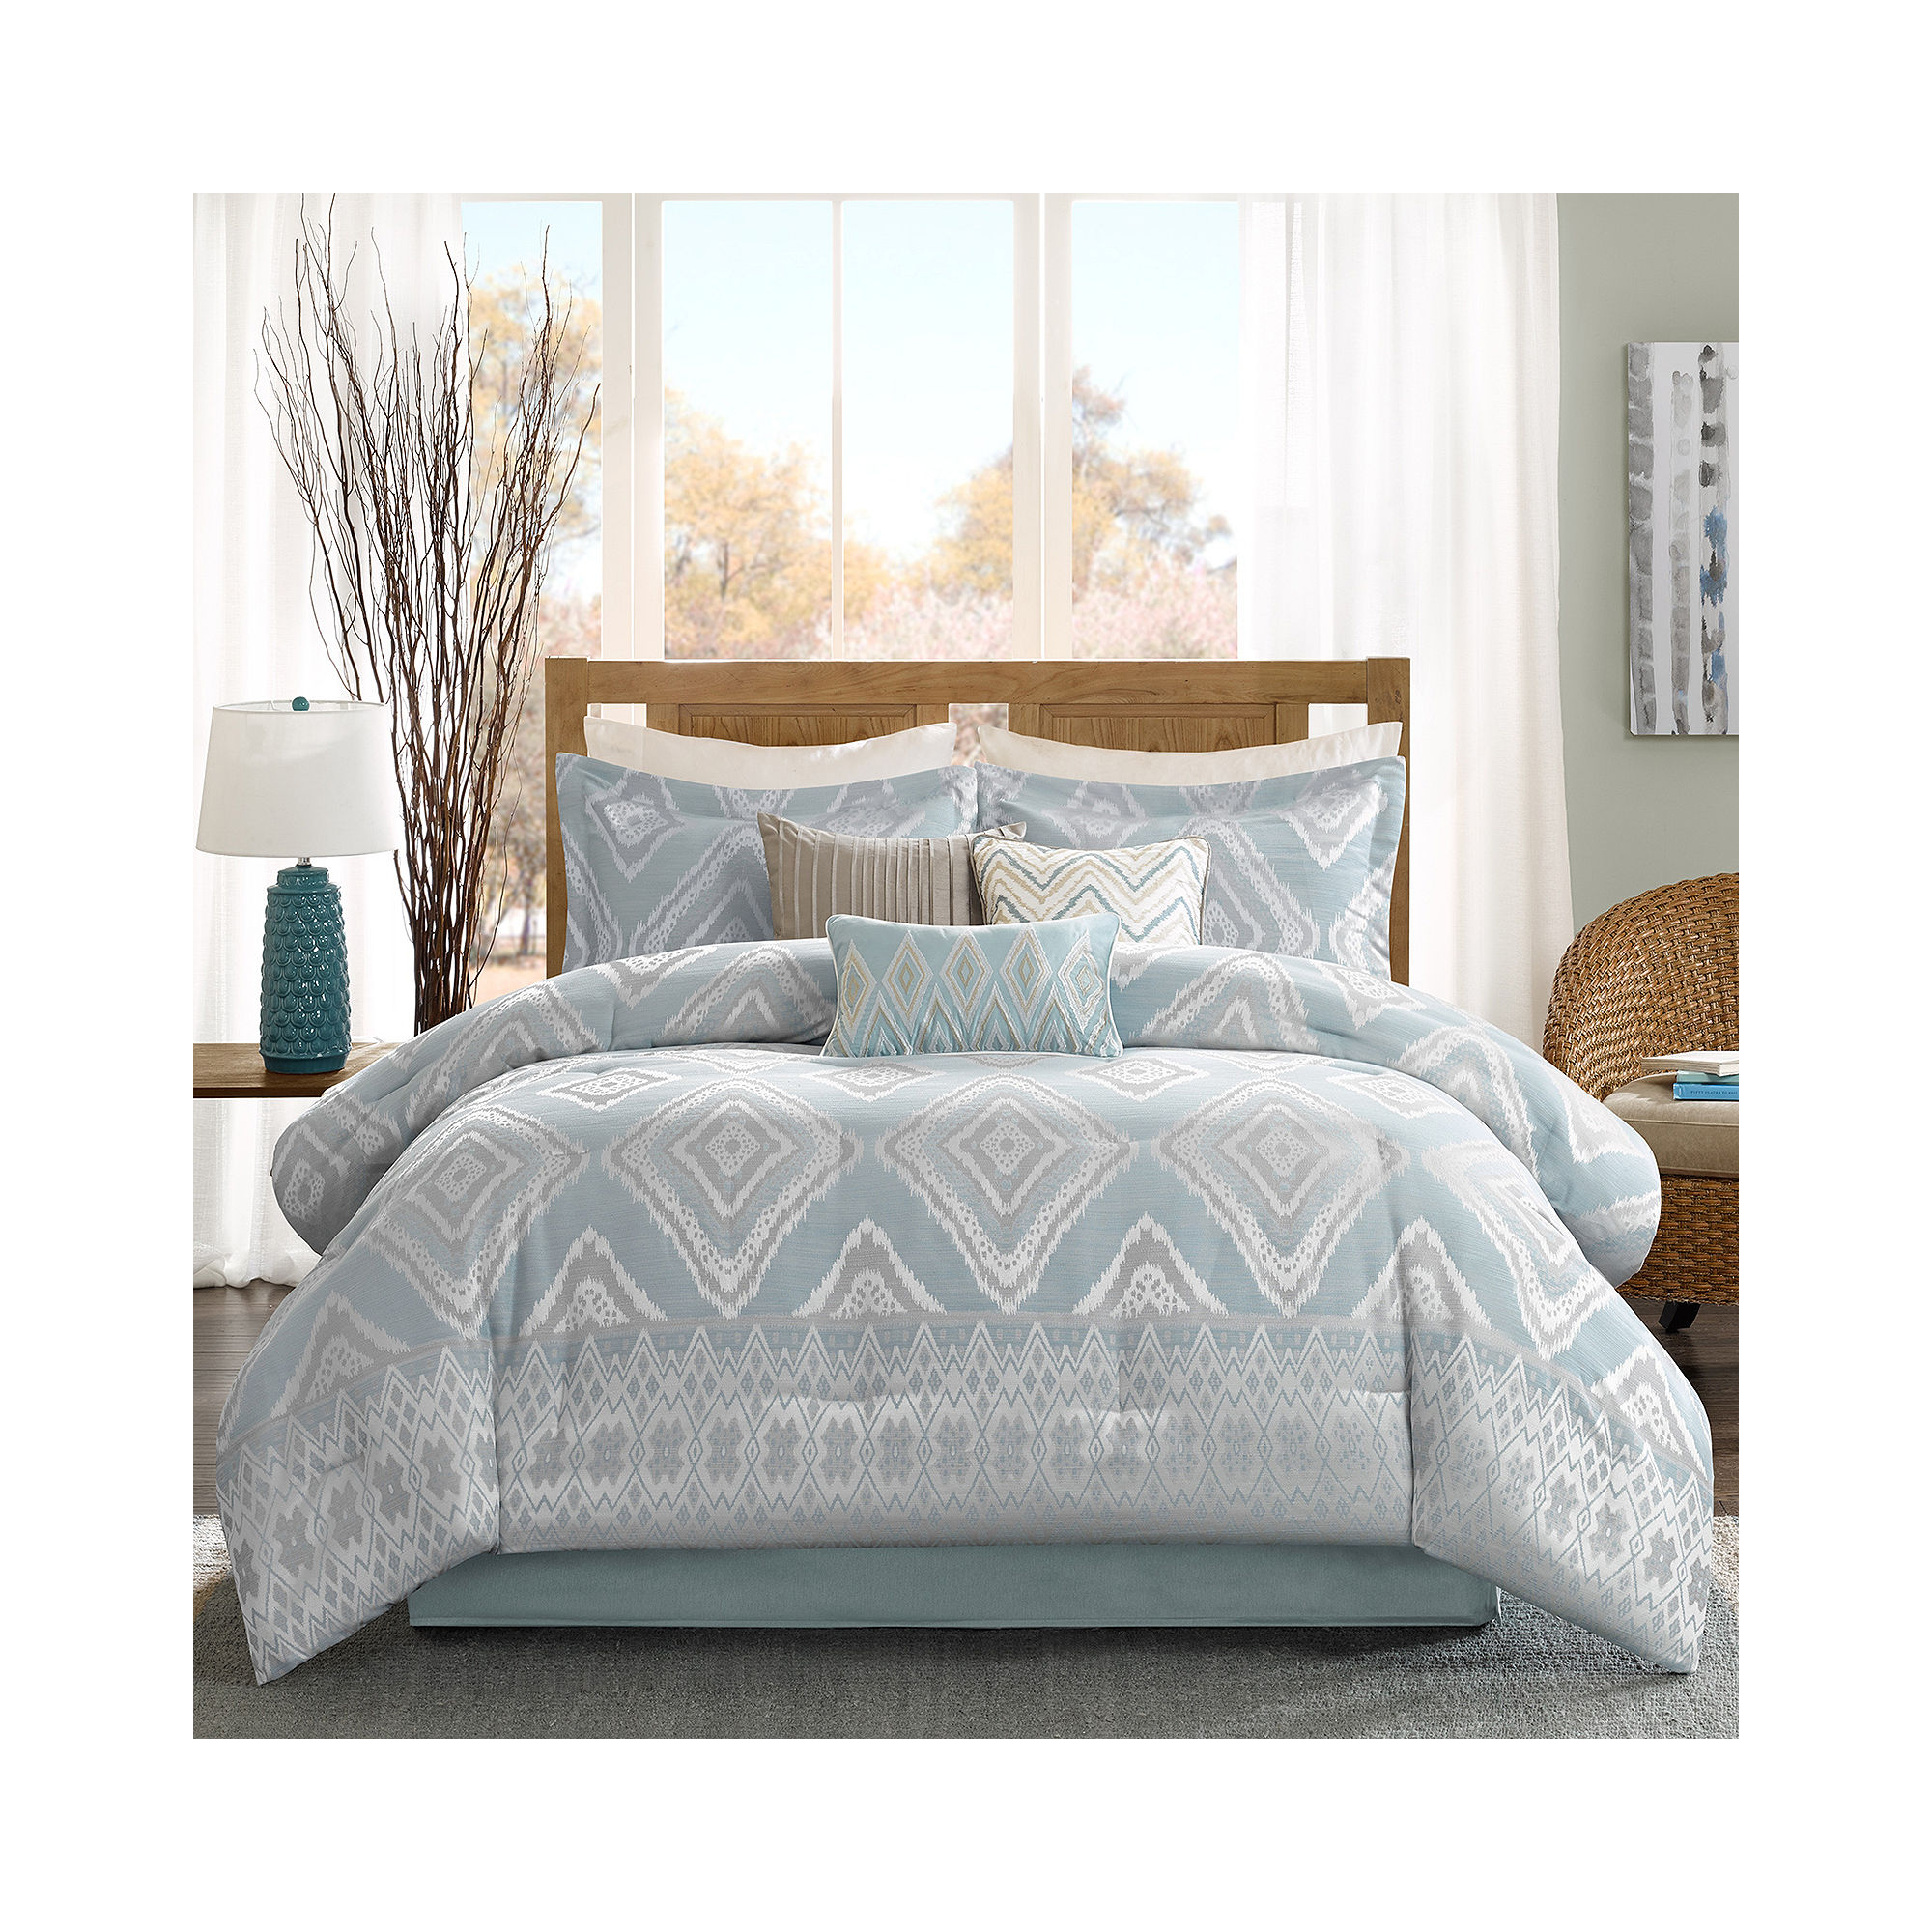 BUY Madison Park Amber 7-pc. Comforter Set NOW | Bedding Sets Store